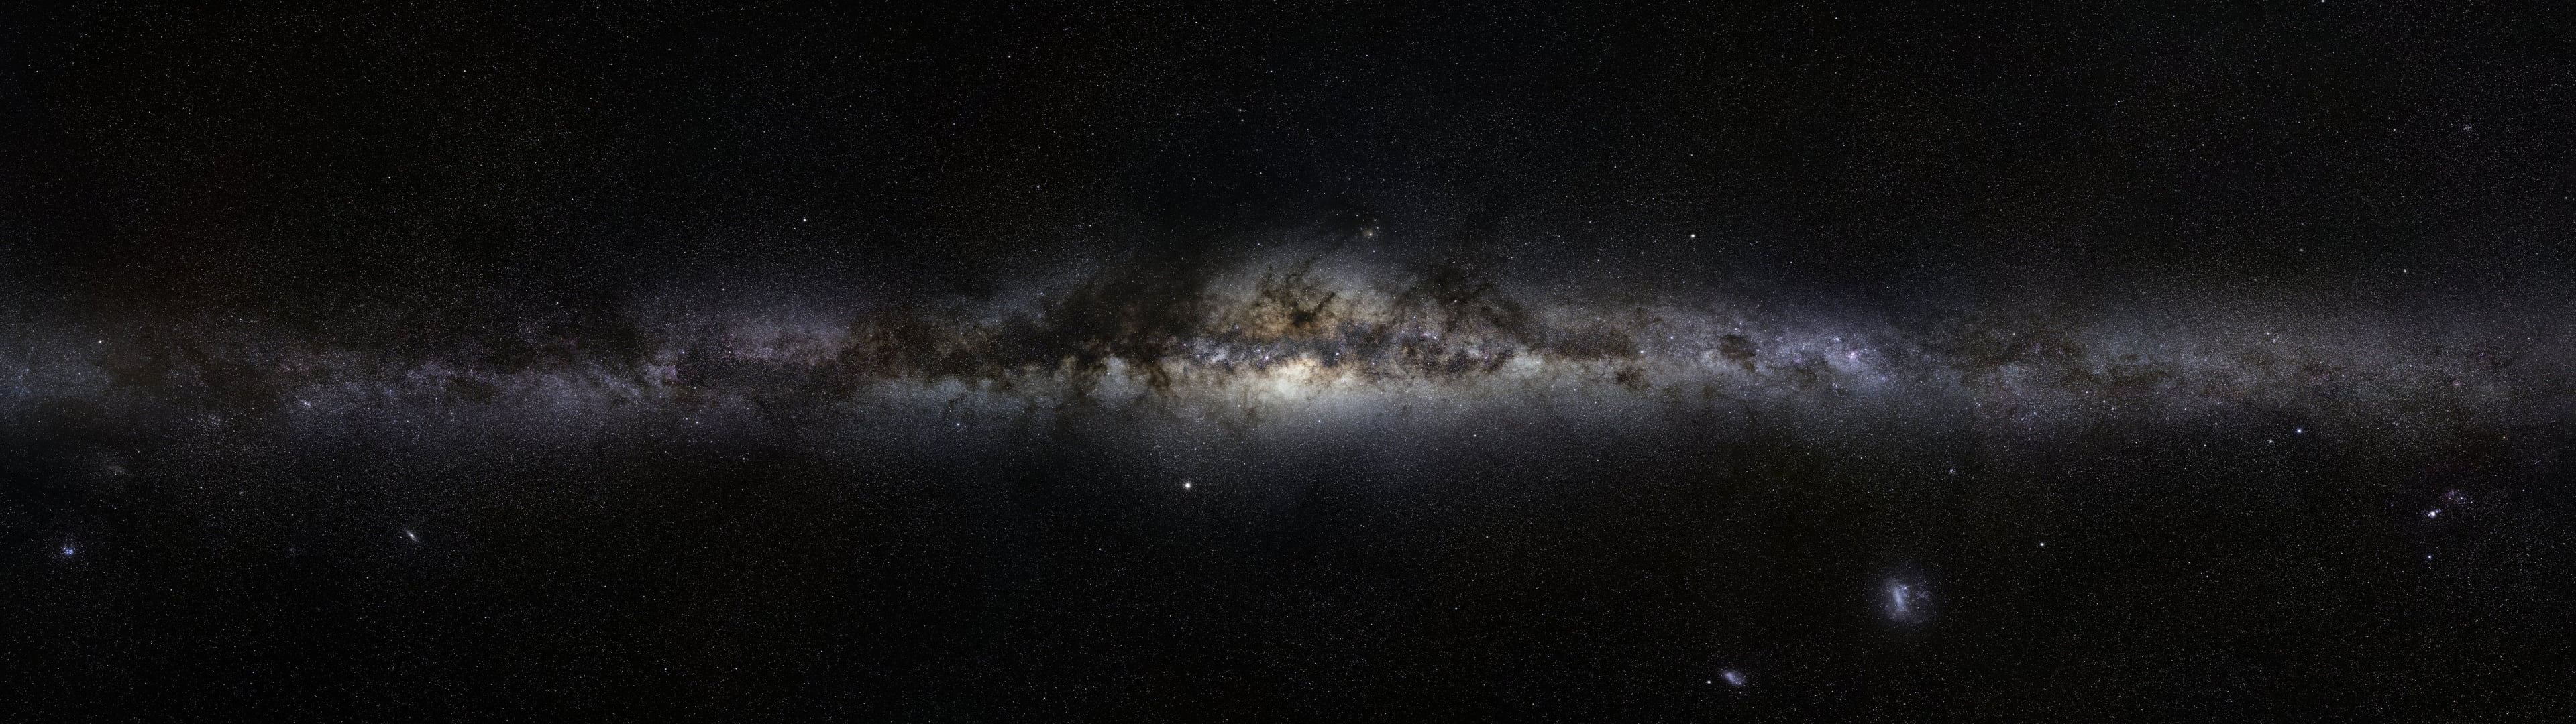 3840x1080 Milky Way Galaxy panoramic photo HD wallpaper